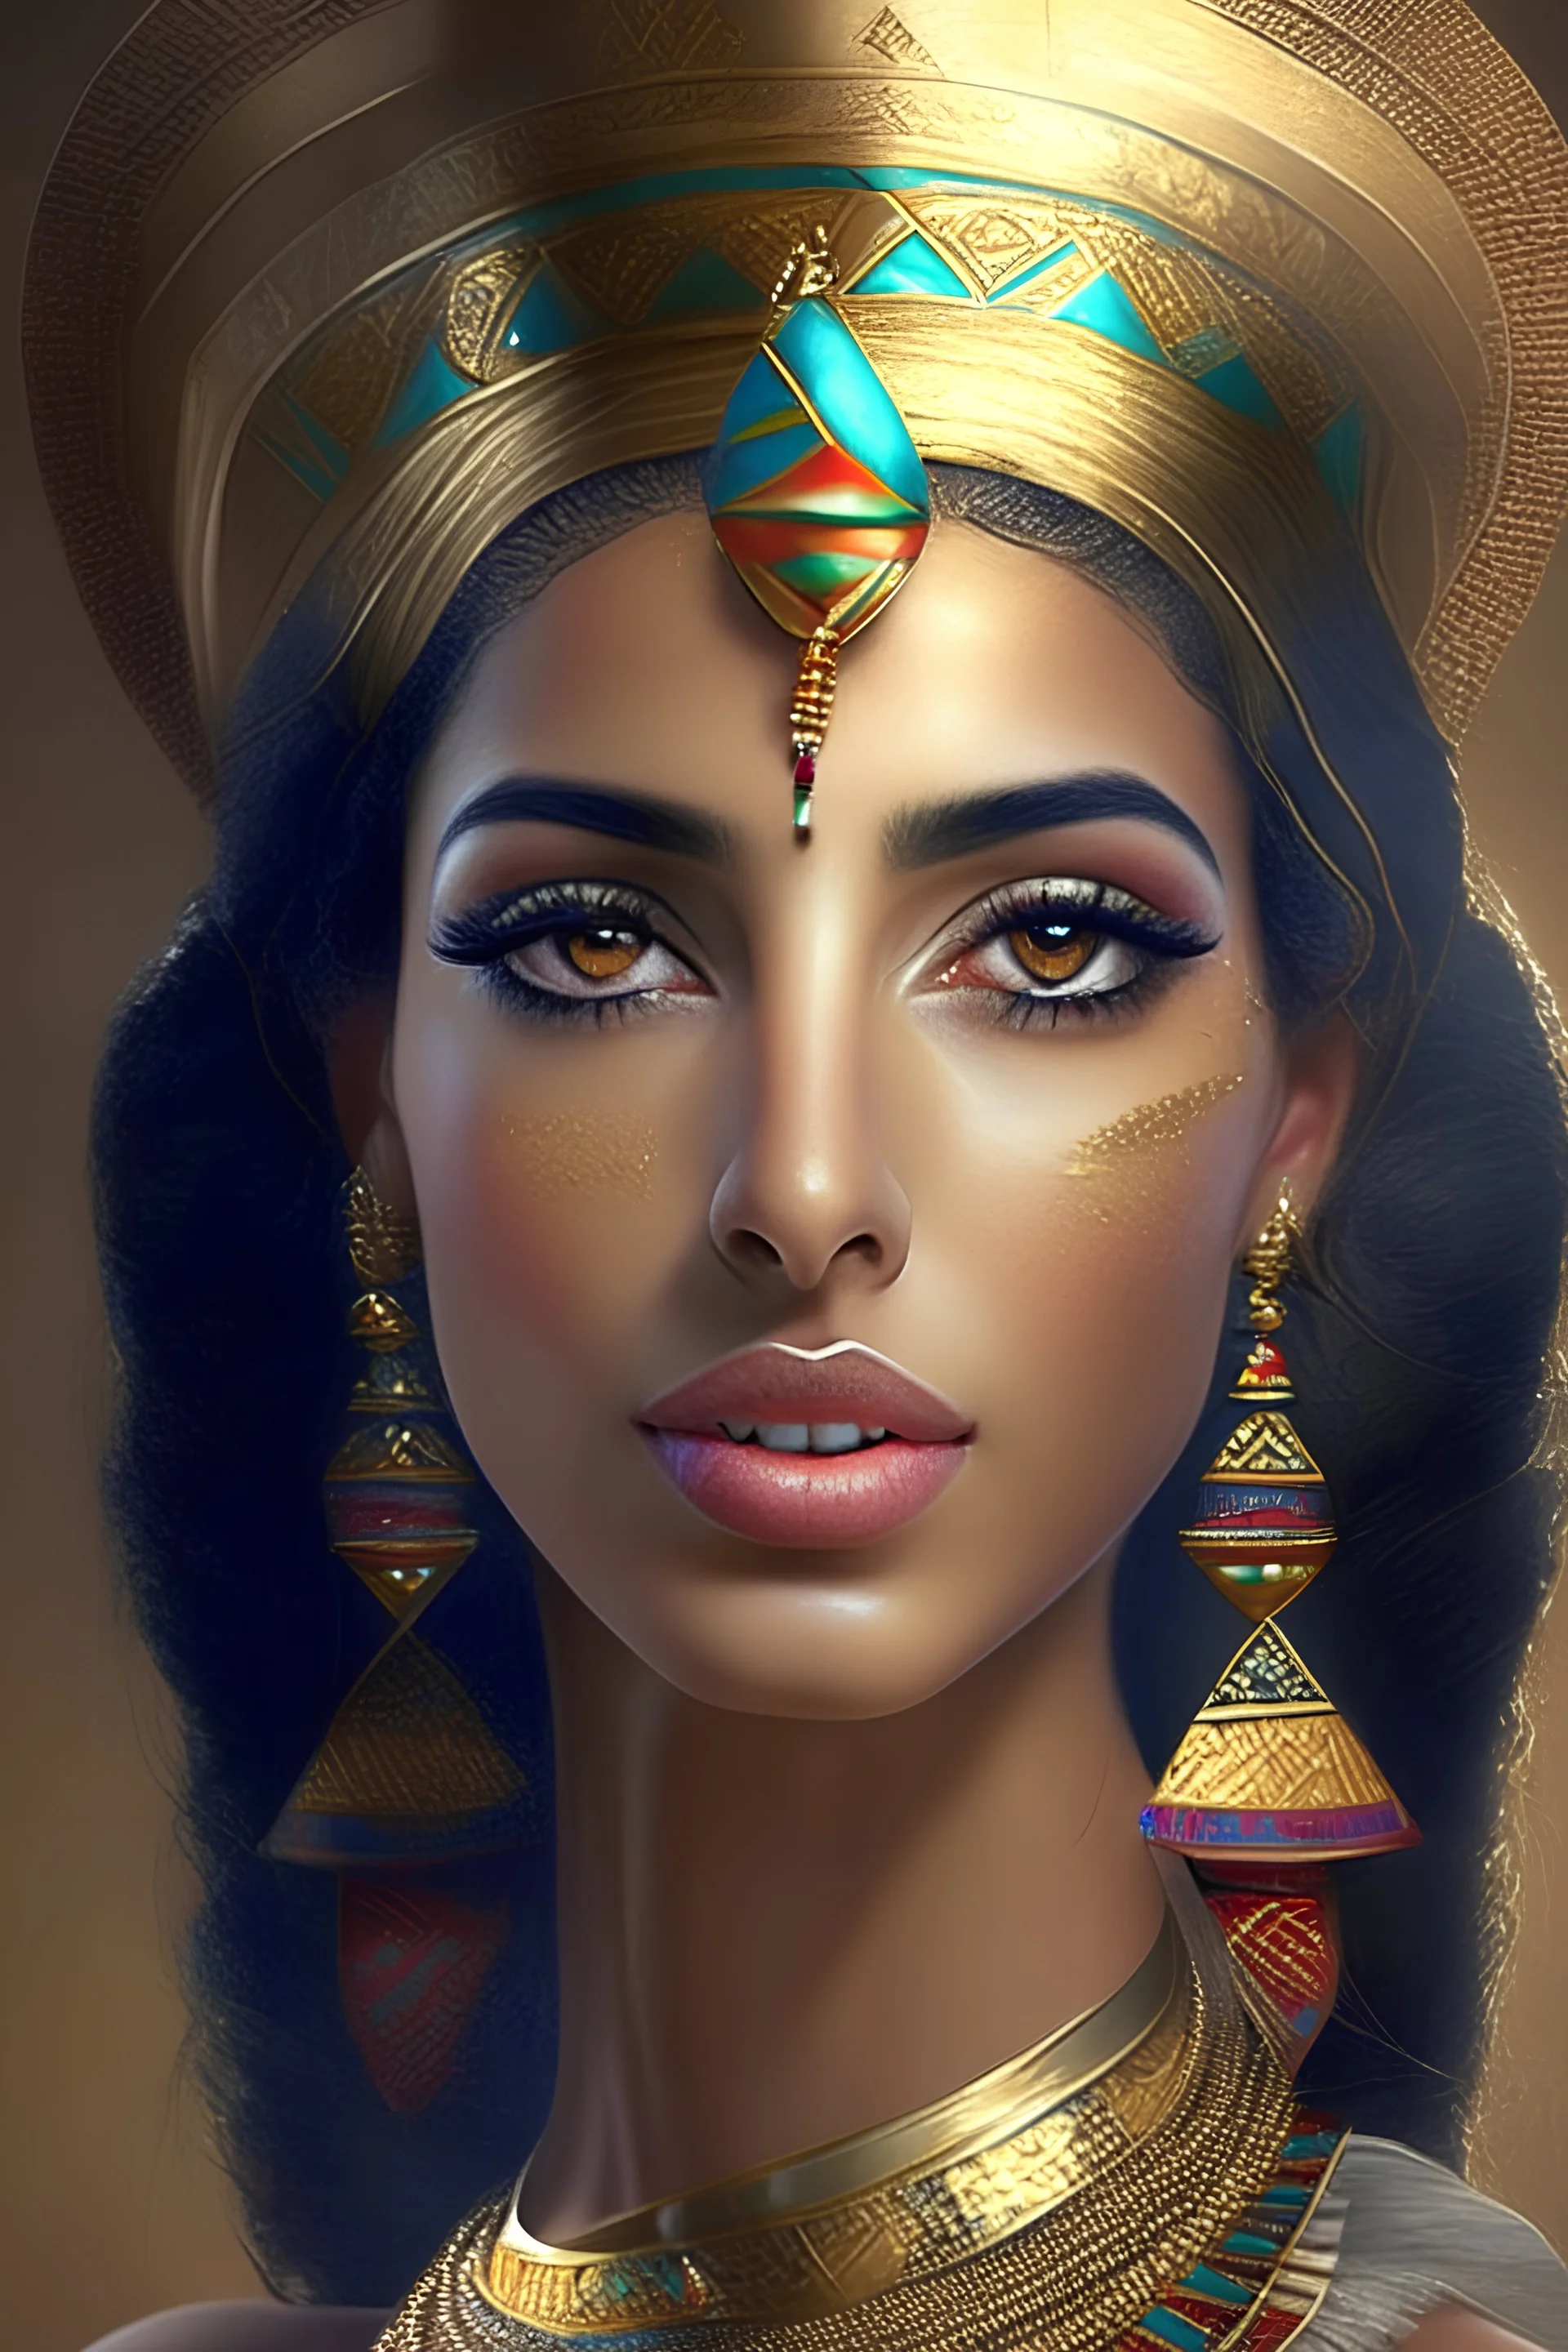 Egyptian beauty queen